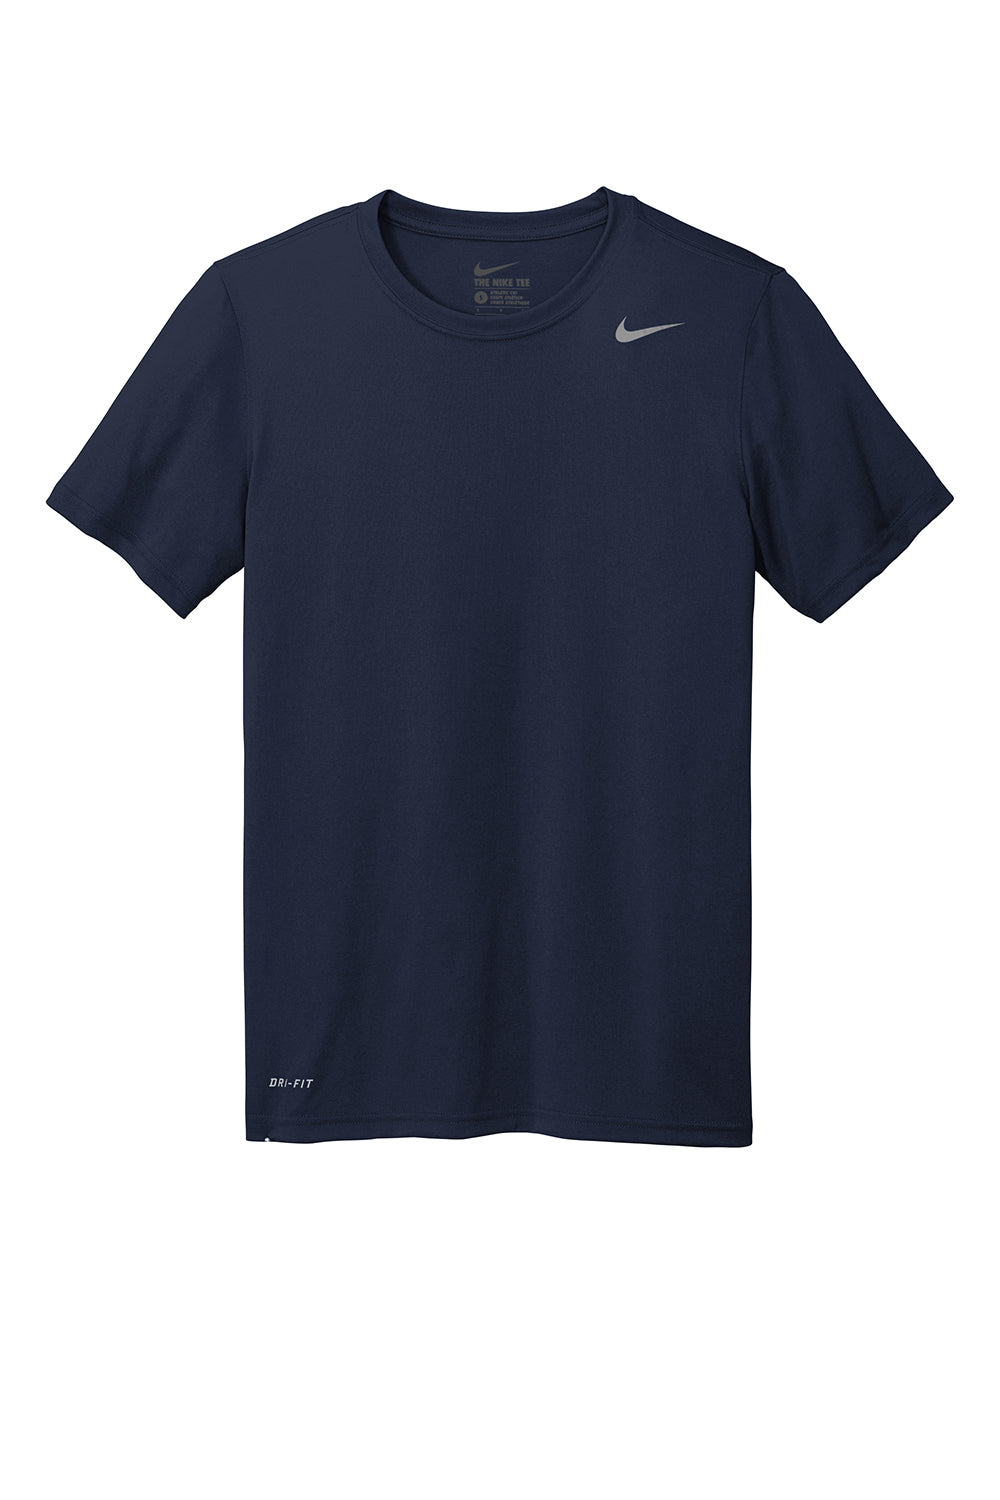 Nike DV7299 Mens Team rLegend Dri-Fit Moisture Wicking Short Sleeve Crewneck T-Shirt College Navy Blue Flat Front